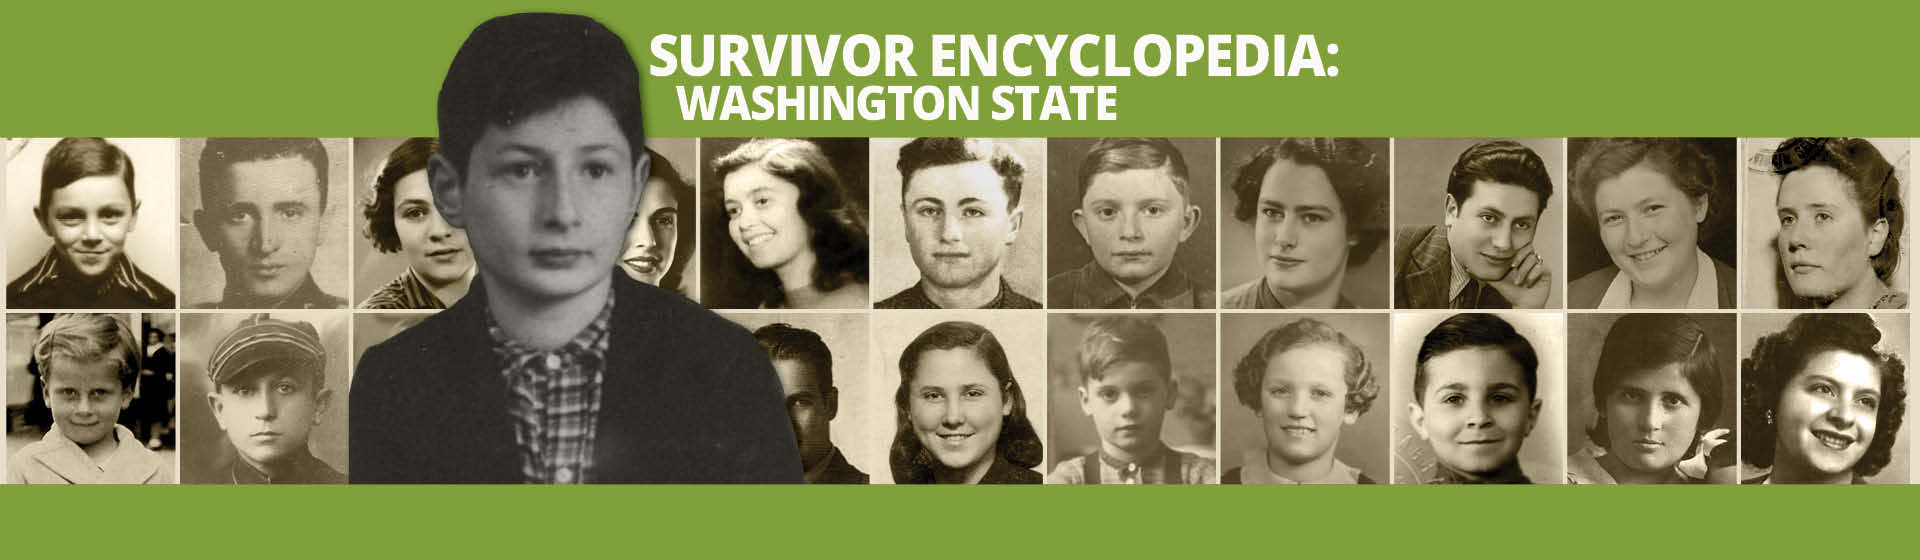 Survivor Encyclopedia: Washington State